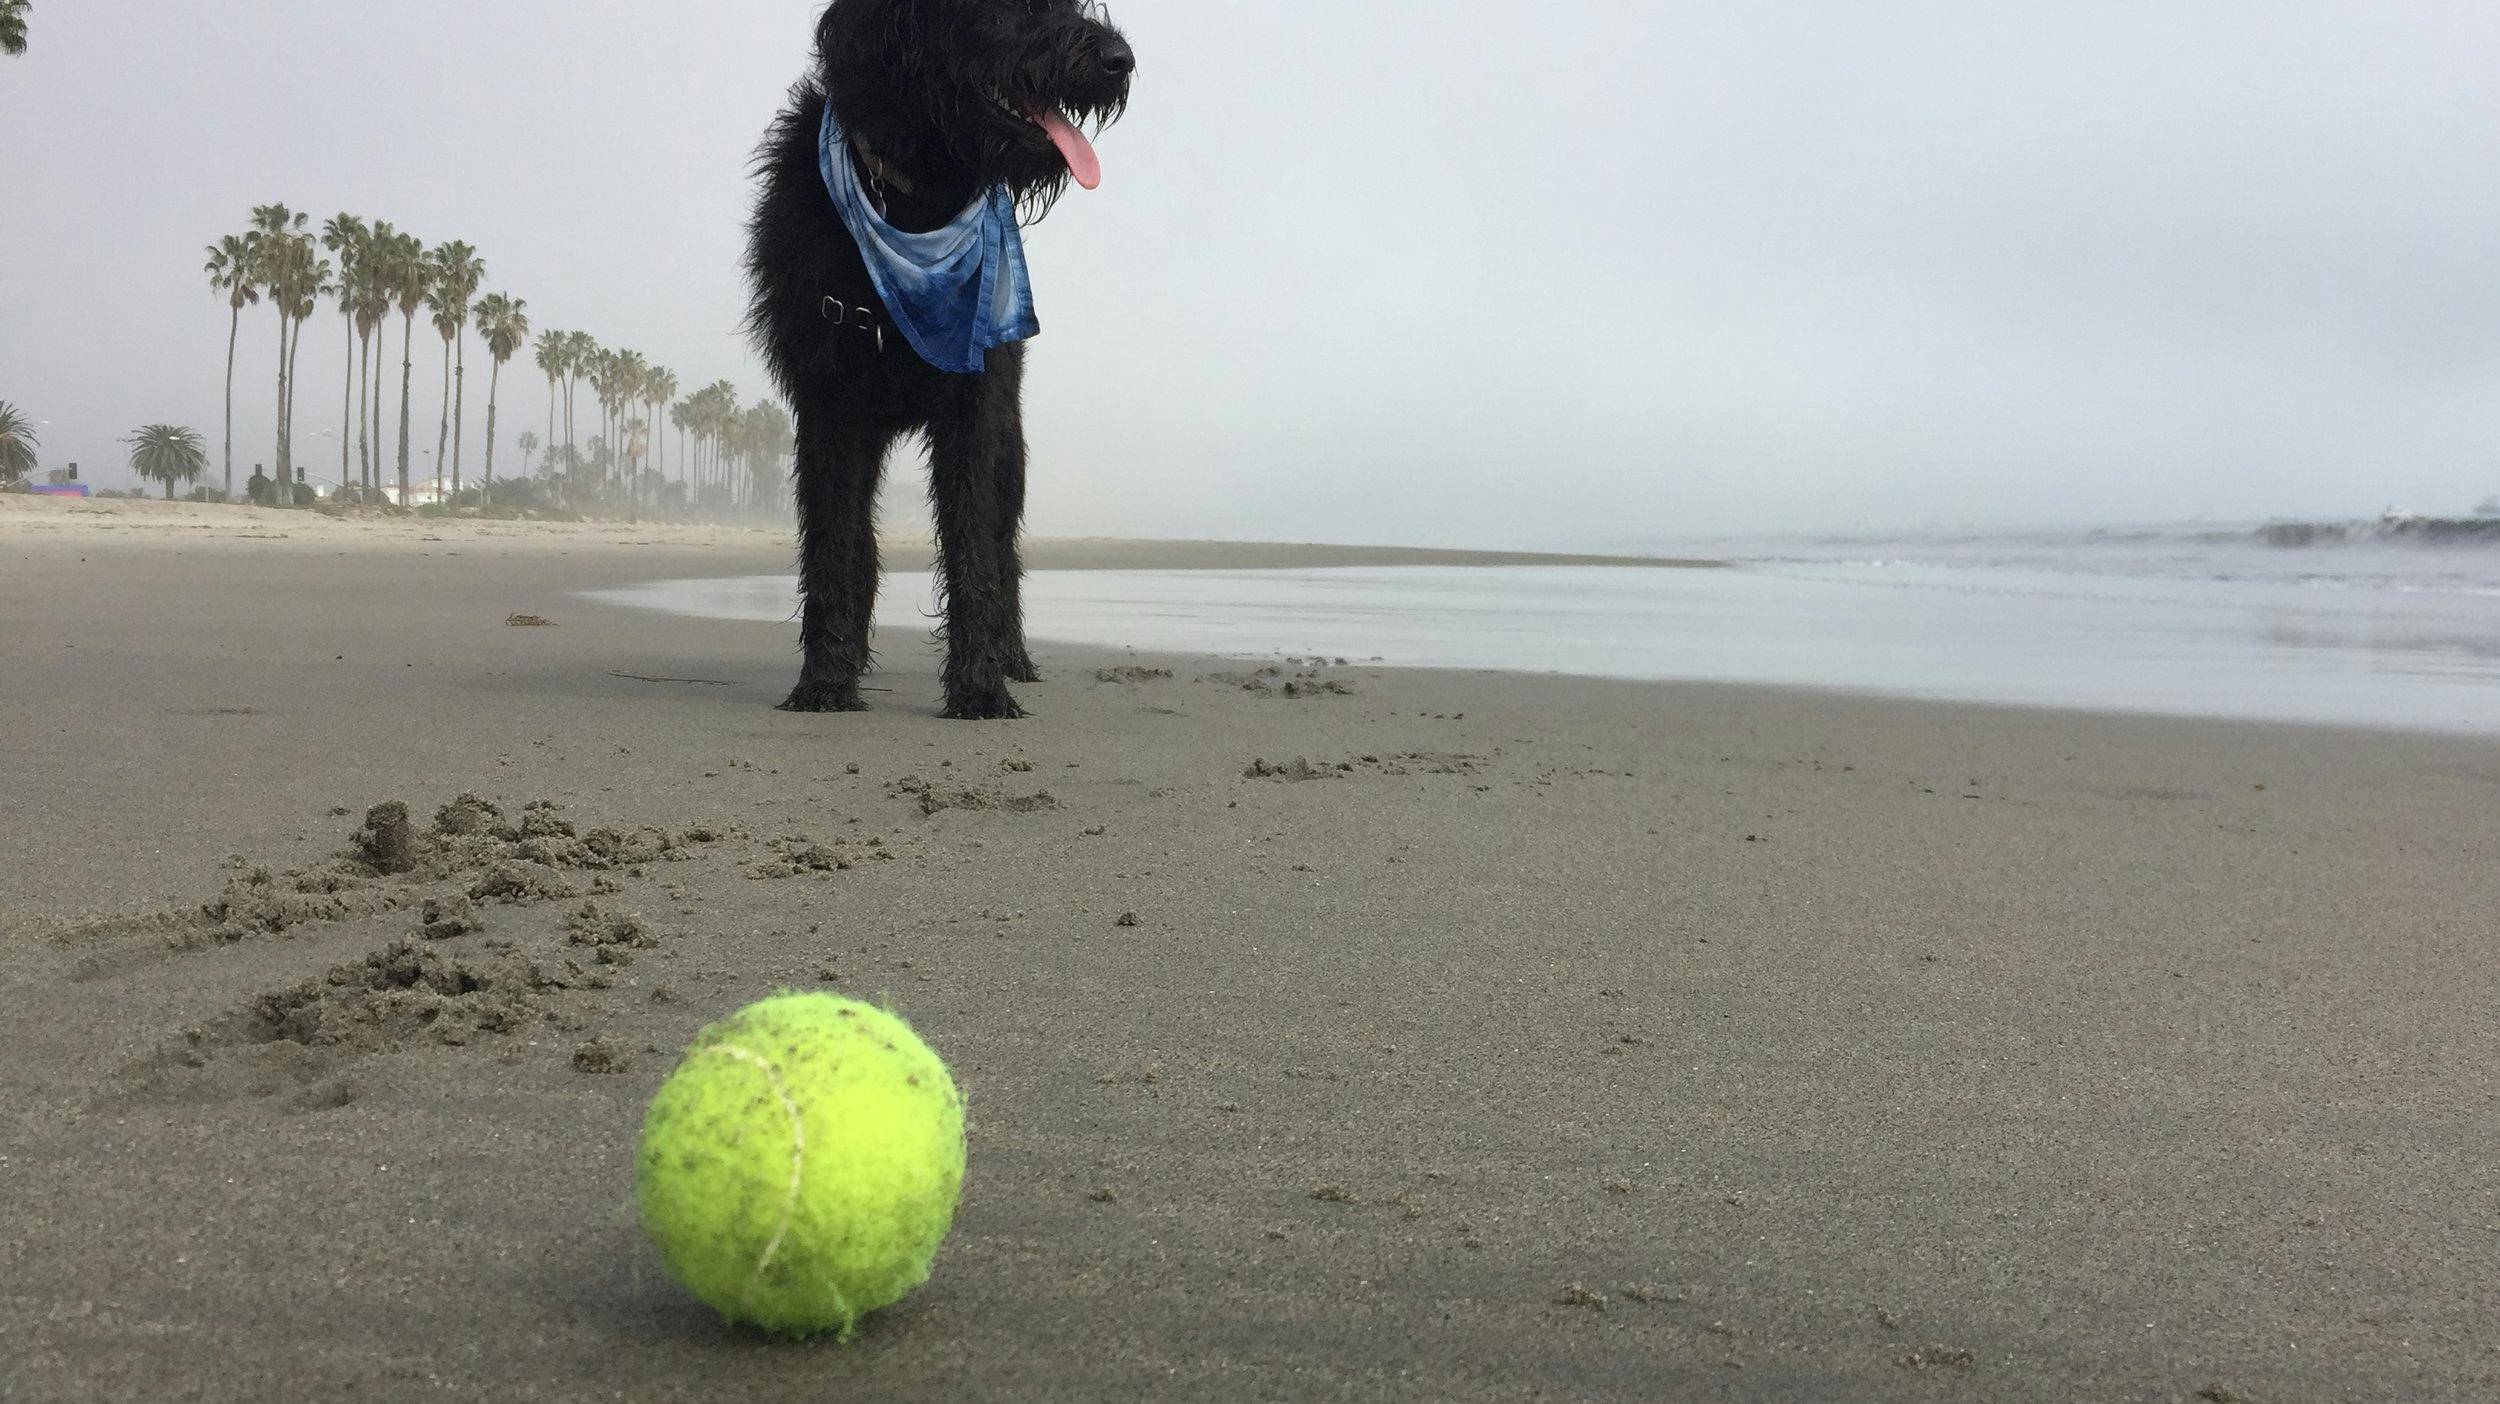 Dog on the beach with a tennis ball